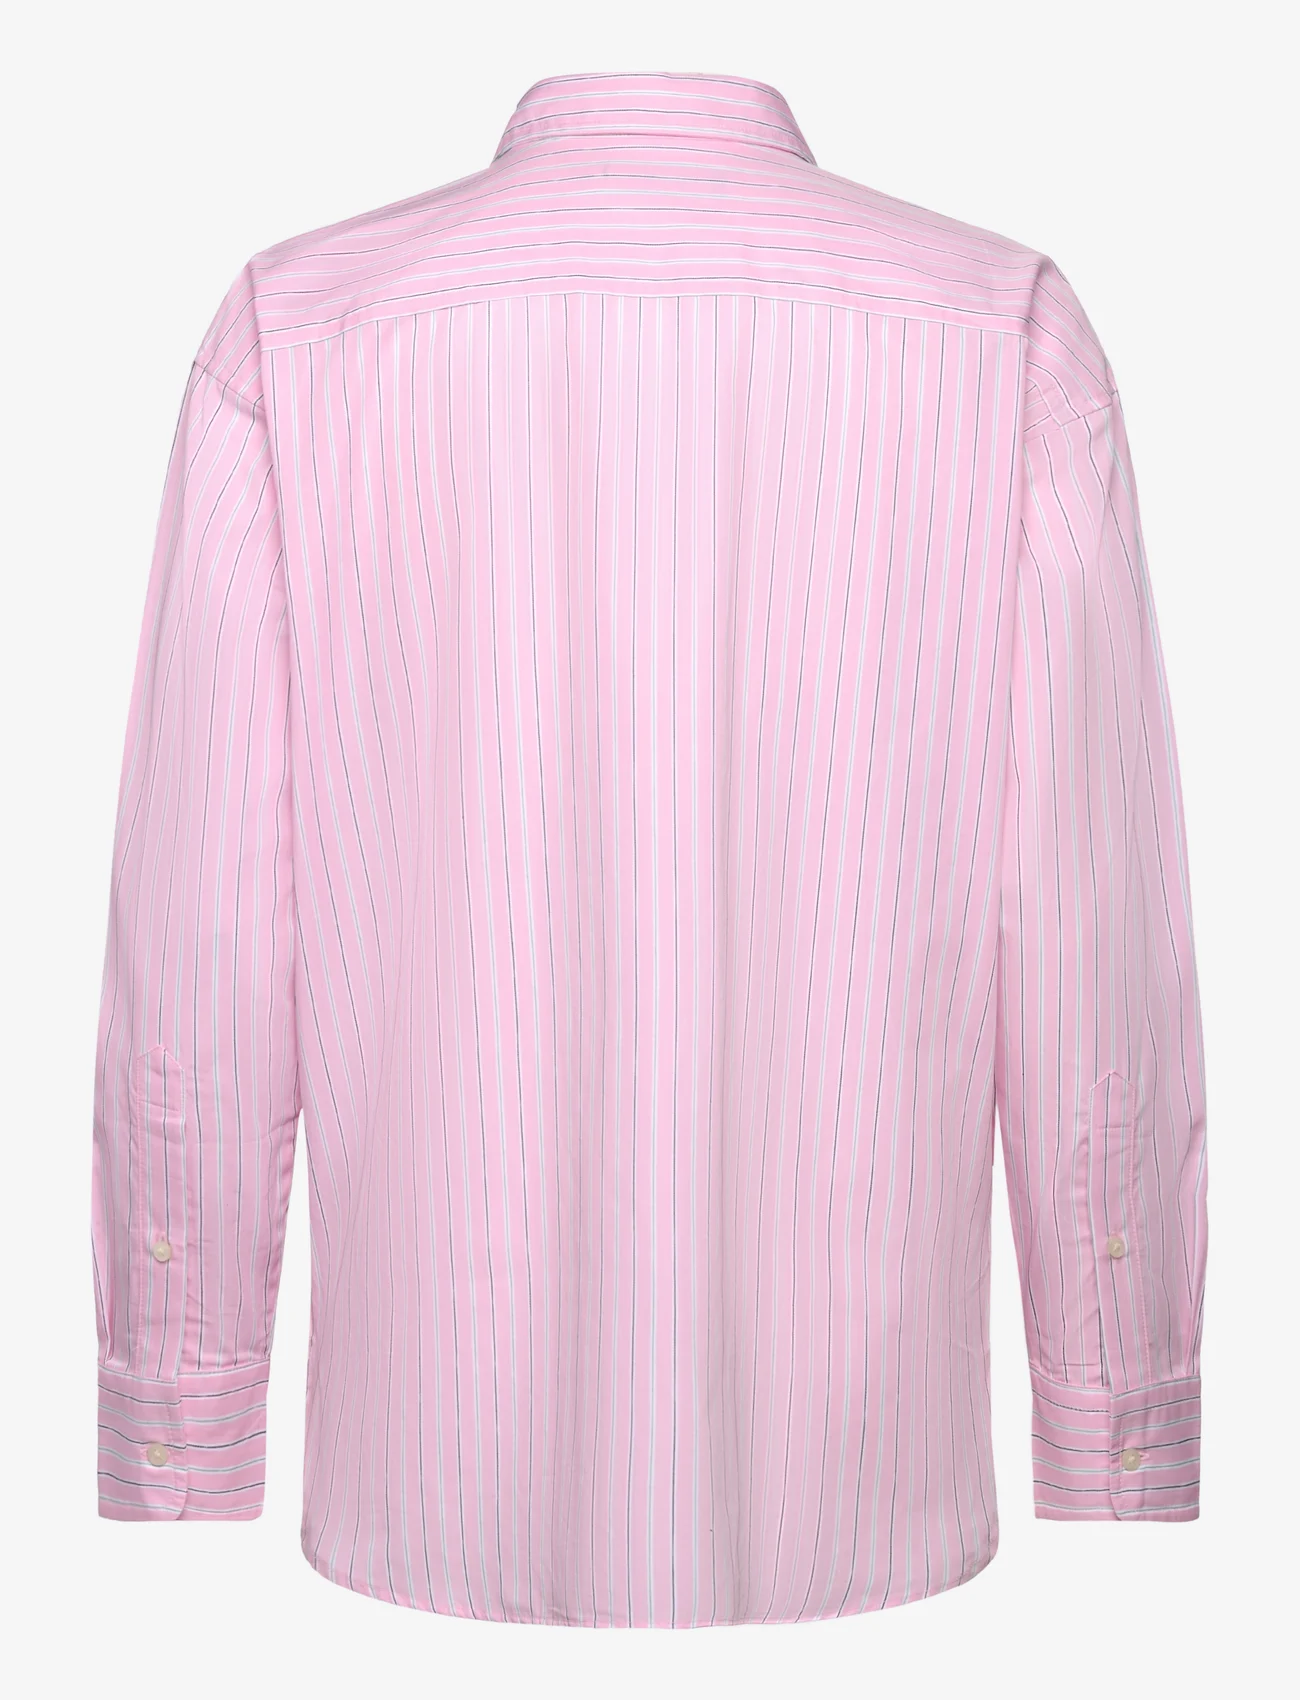 Lauren Ralph Lauren - Relaxed Fit Striped Broadcloth Shirt - langärmlige hemden - pink/white multi - 1